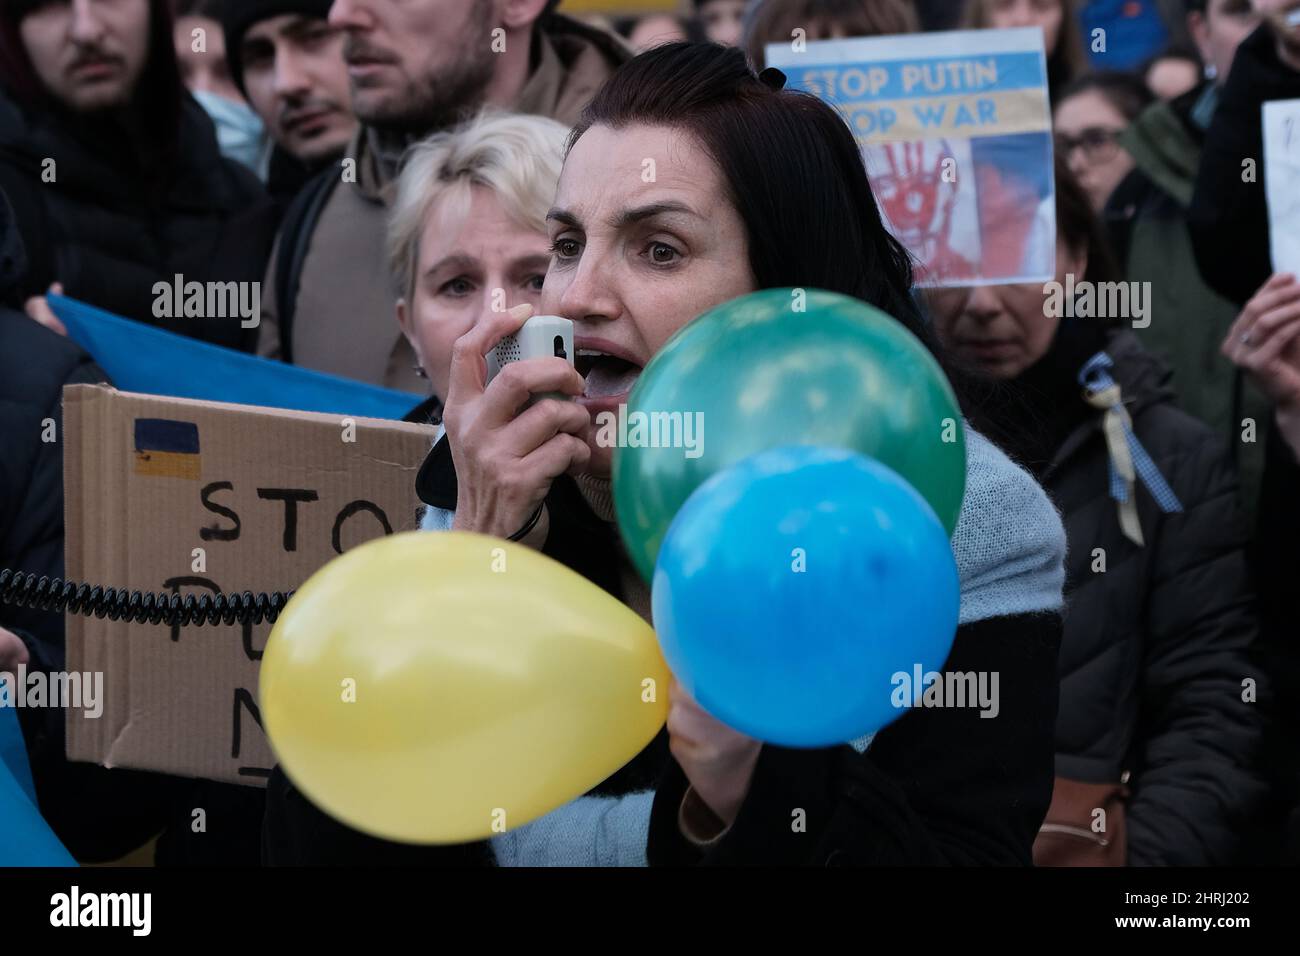 Stop Putin - female protestor in Whitehall, London Stock Photo